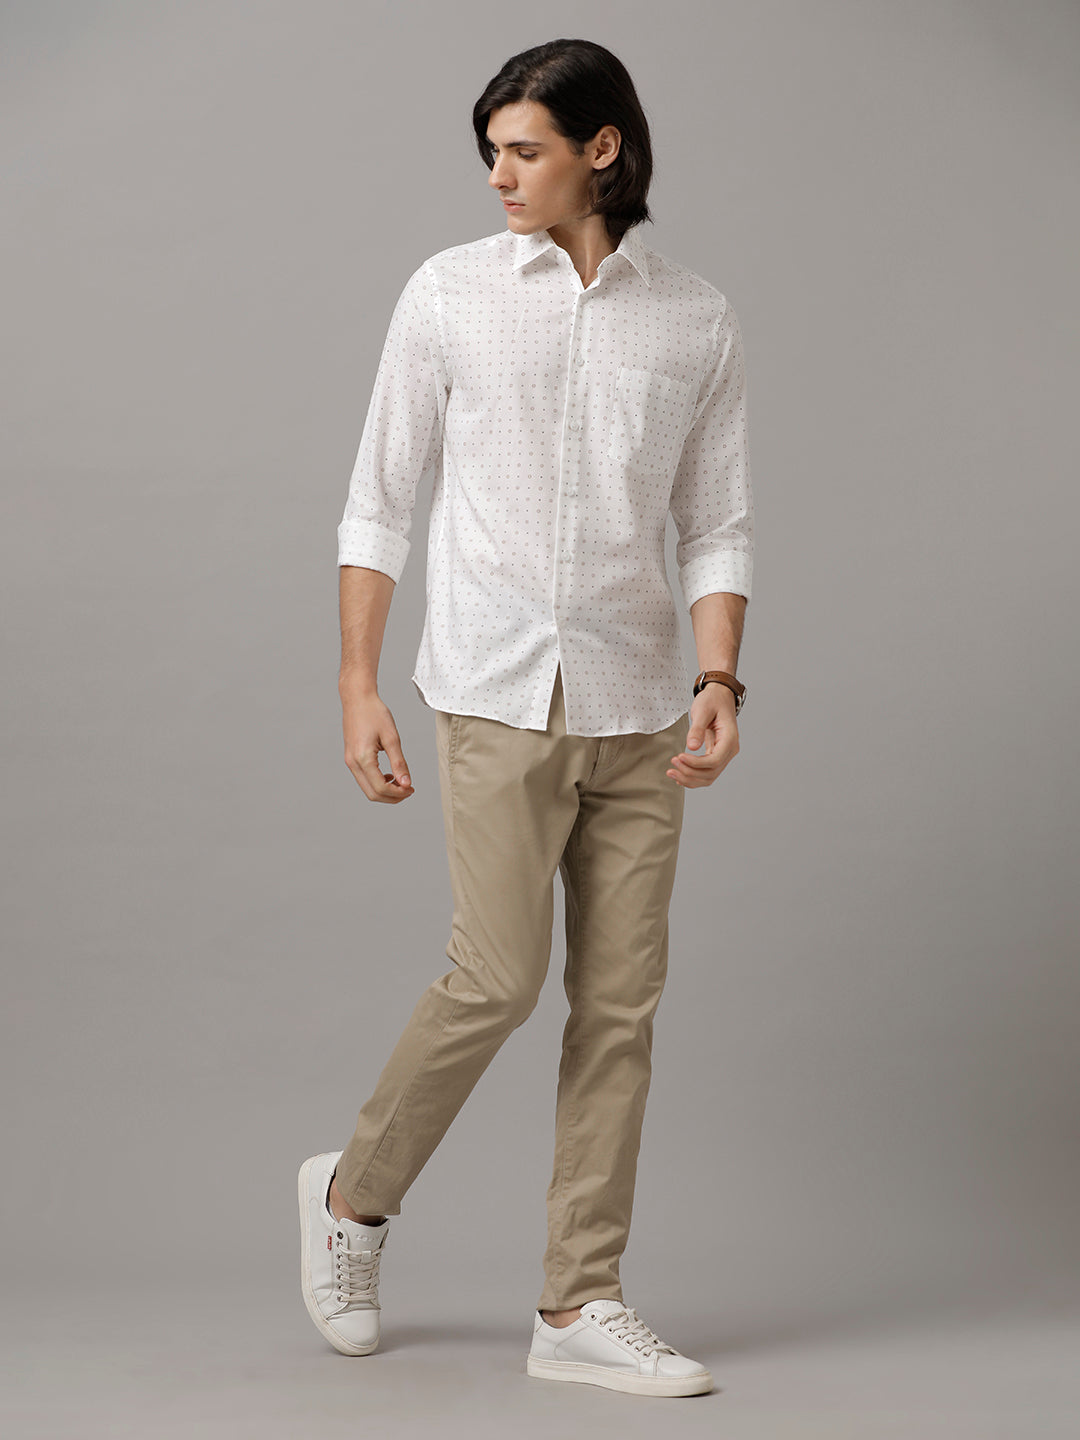 Aldeno Men Printed Casual White Shirt (AEDEN)